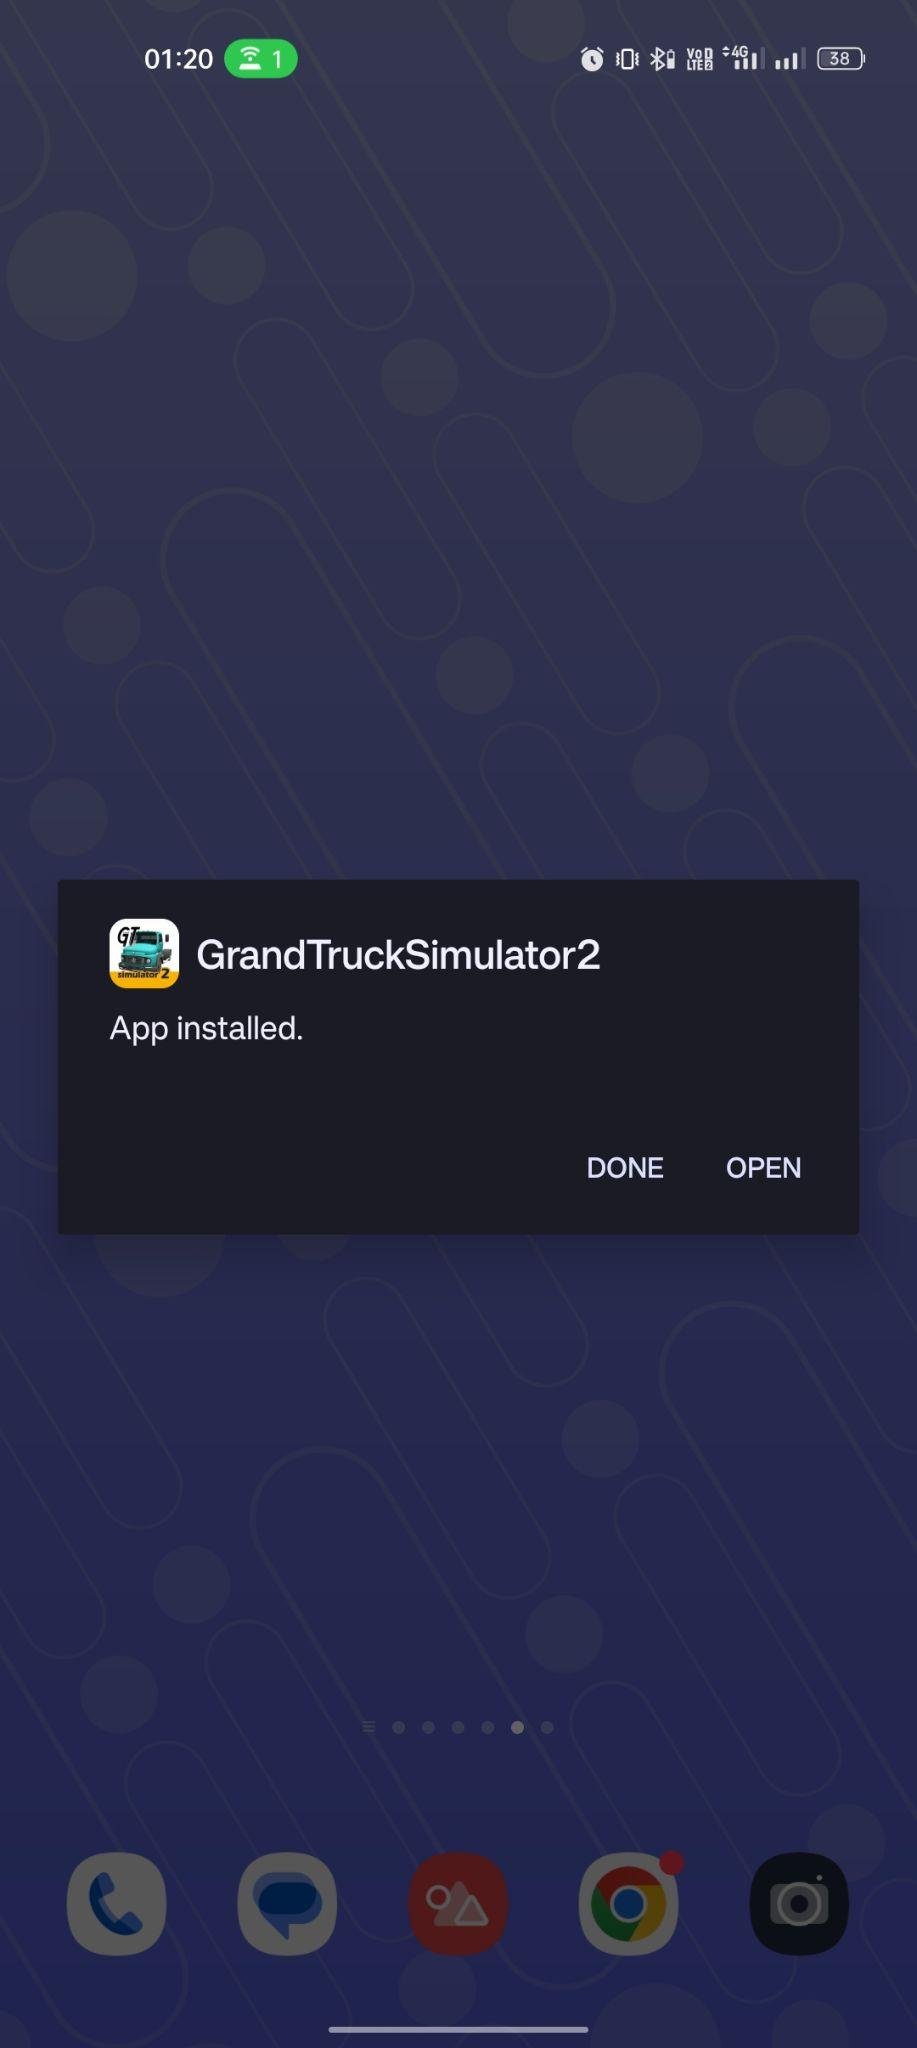 Grand Truck Simulator 2 apk installed